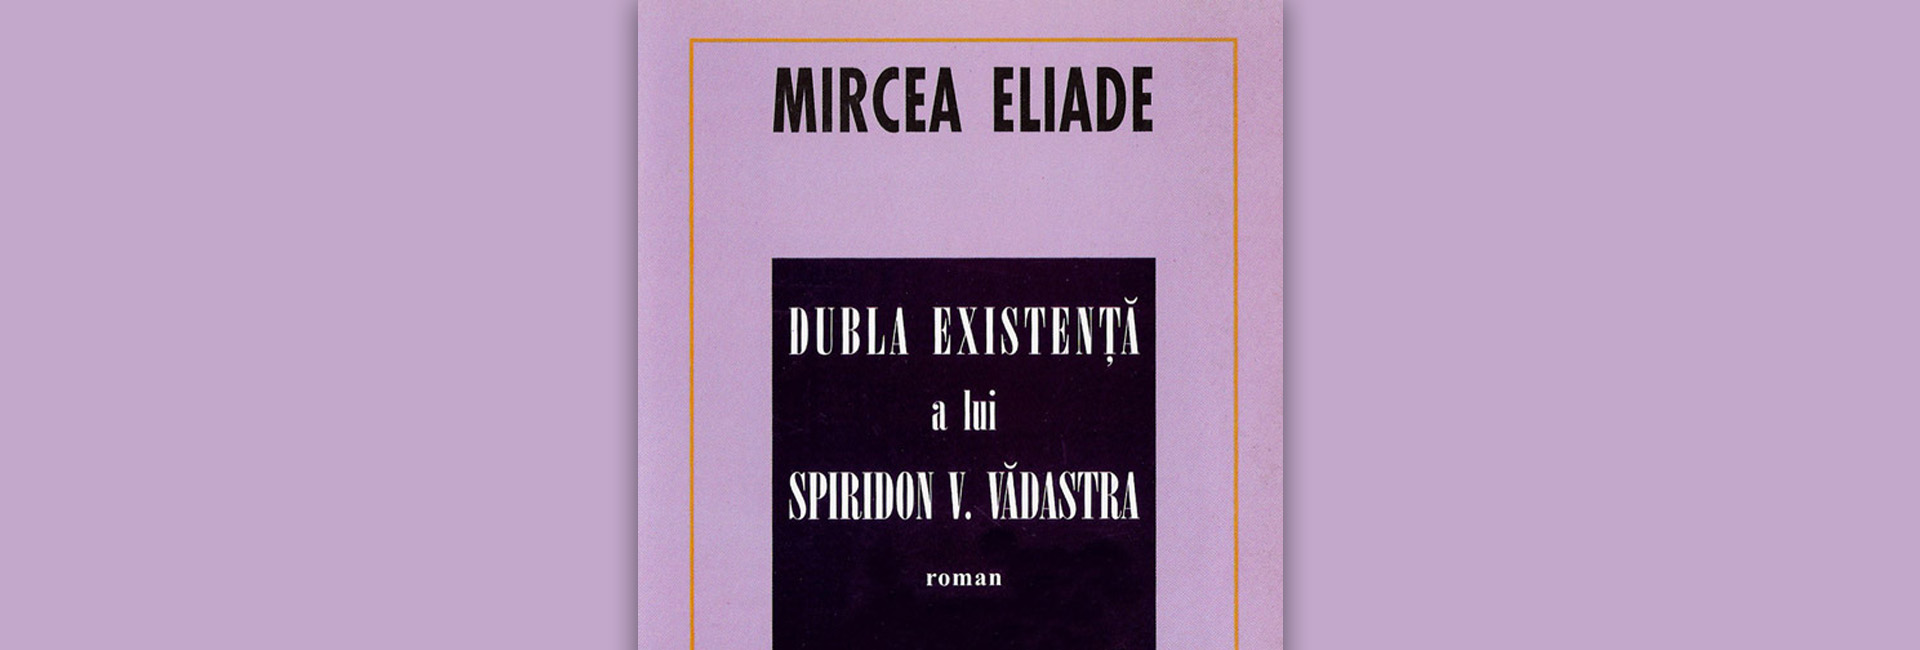 recenzie Mircea Eliade Dubla Existență a lui Spiridon V. Vădastra roman